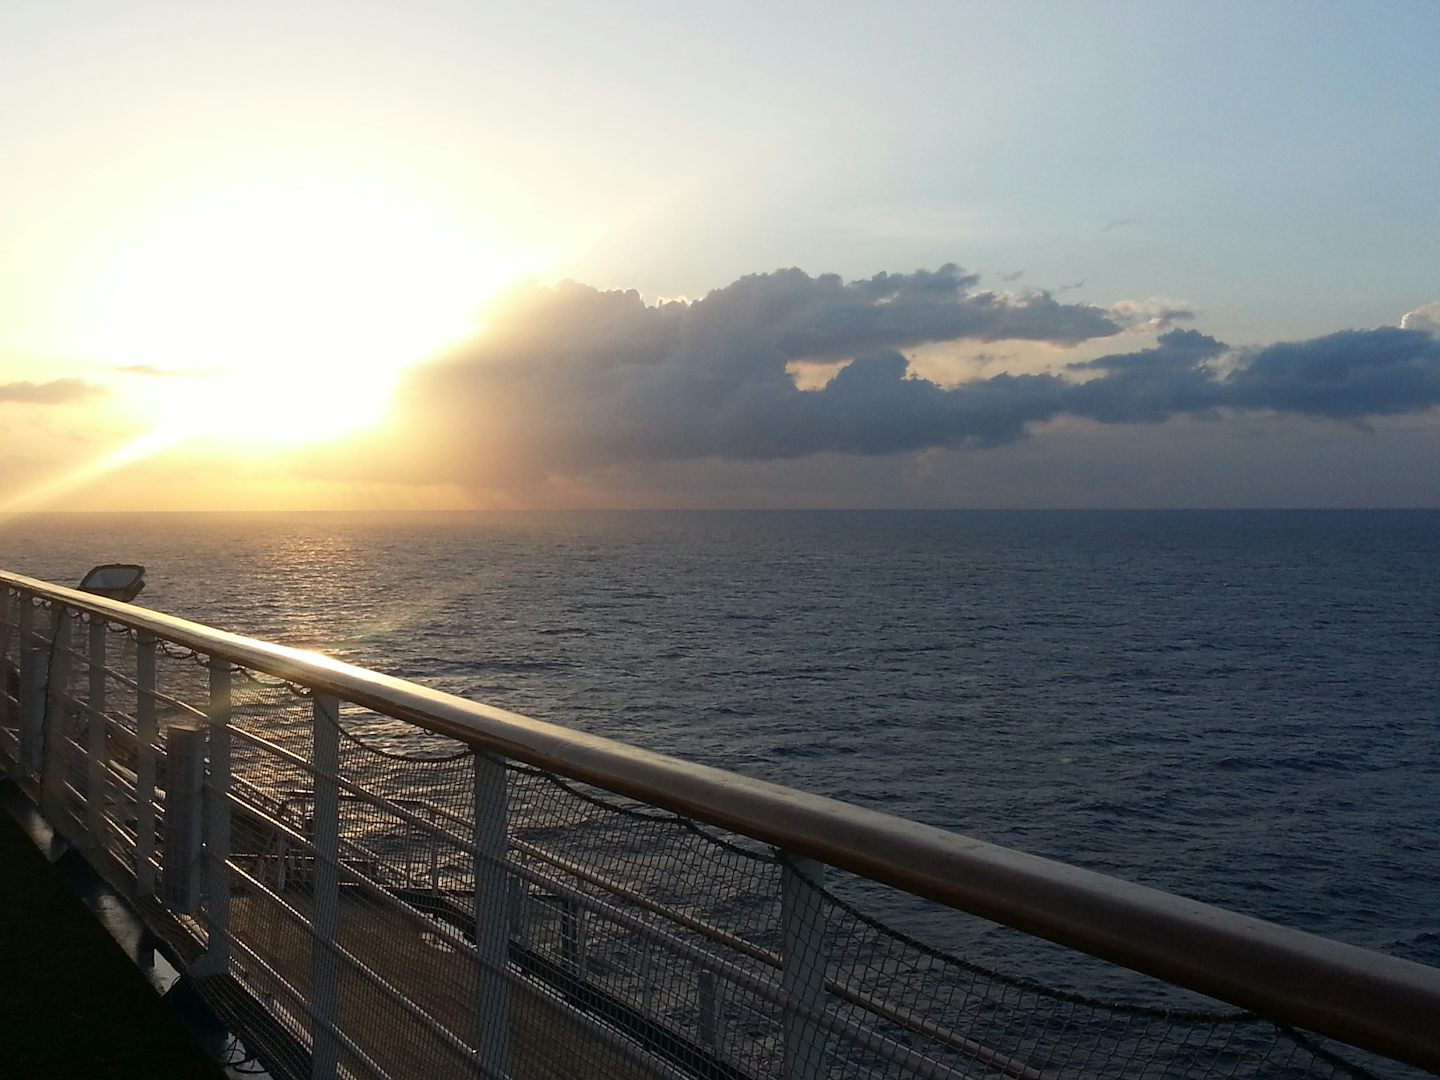 Sunset at sea